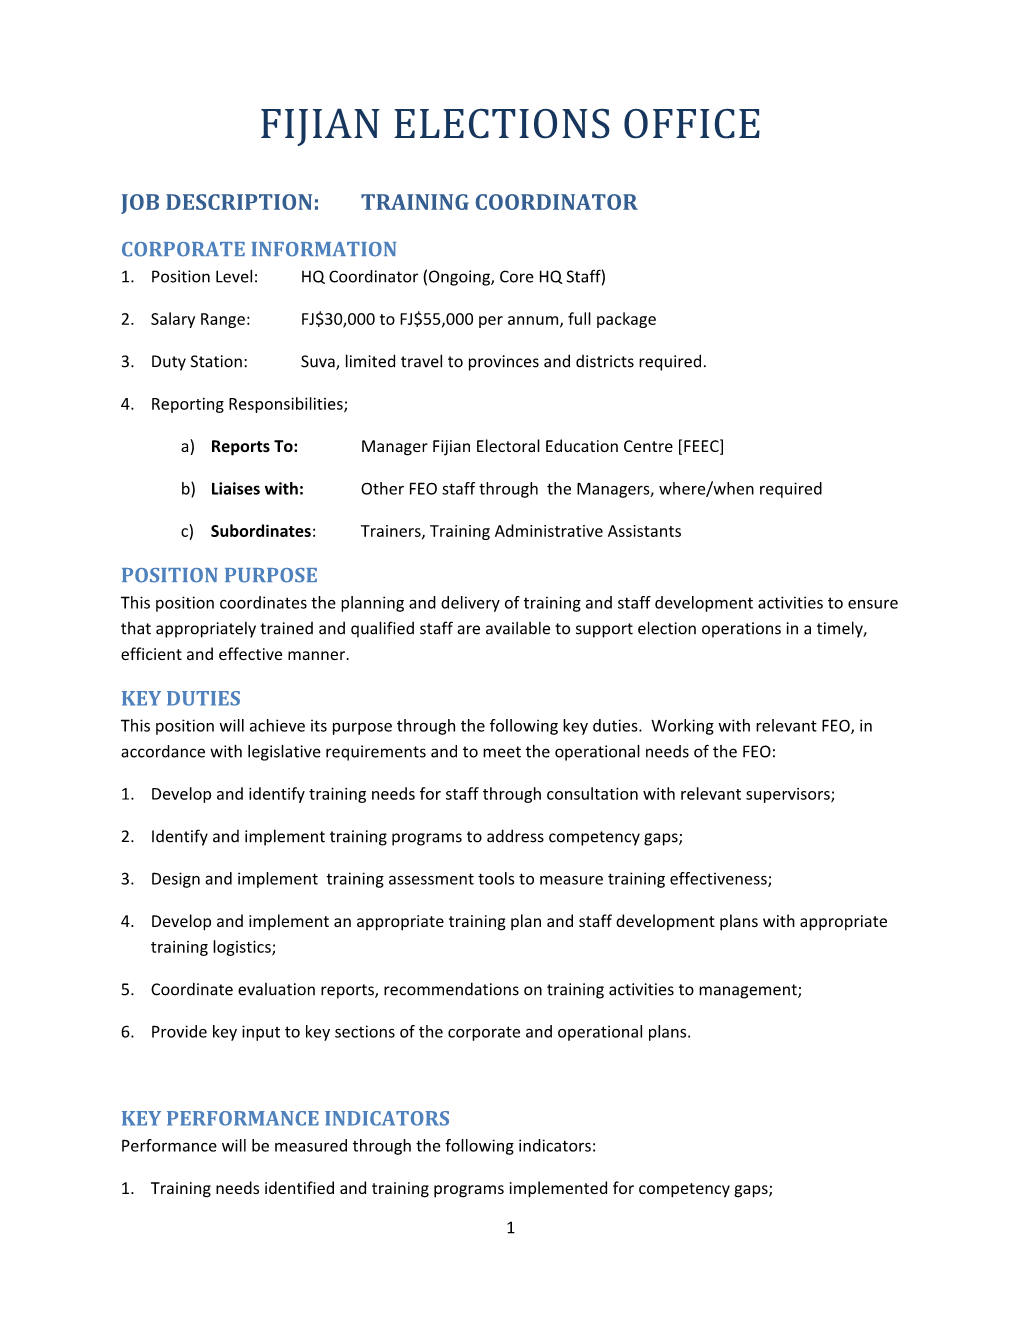 Job Description:Training Coordinator